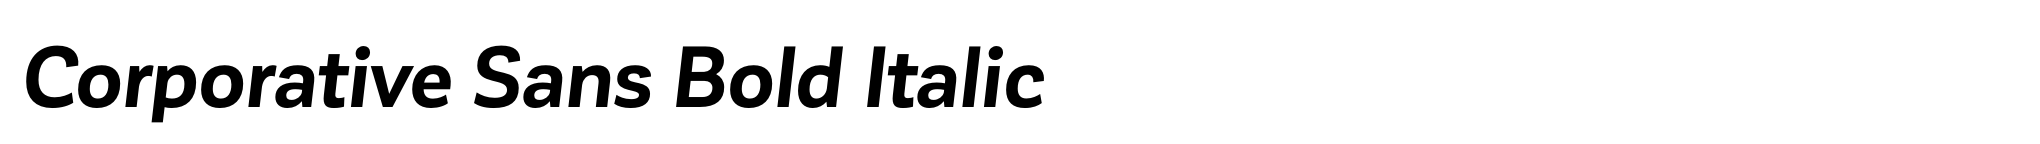 Corporative Sans Bold Italic image